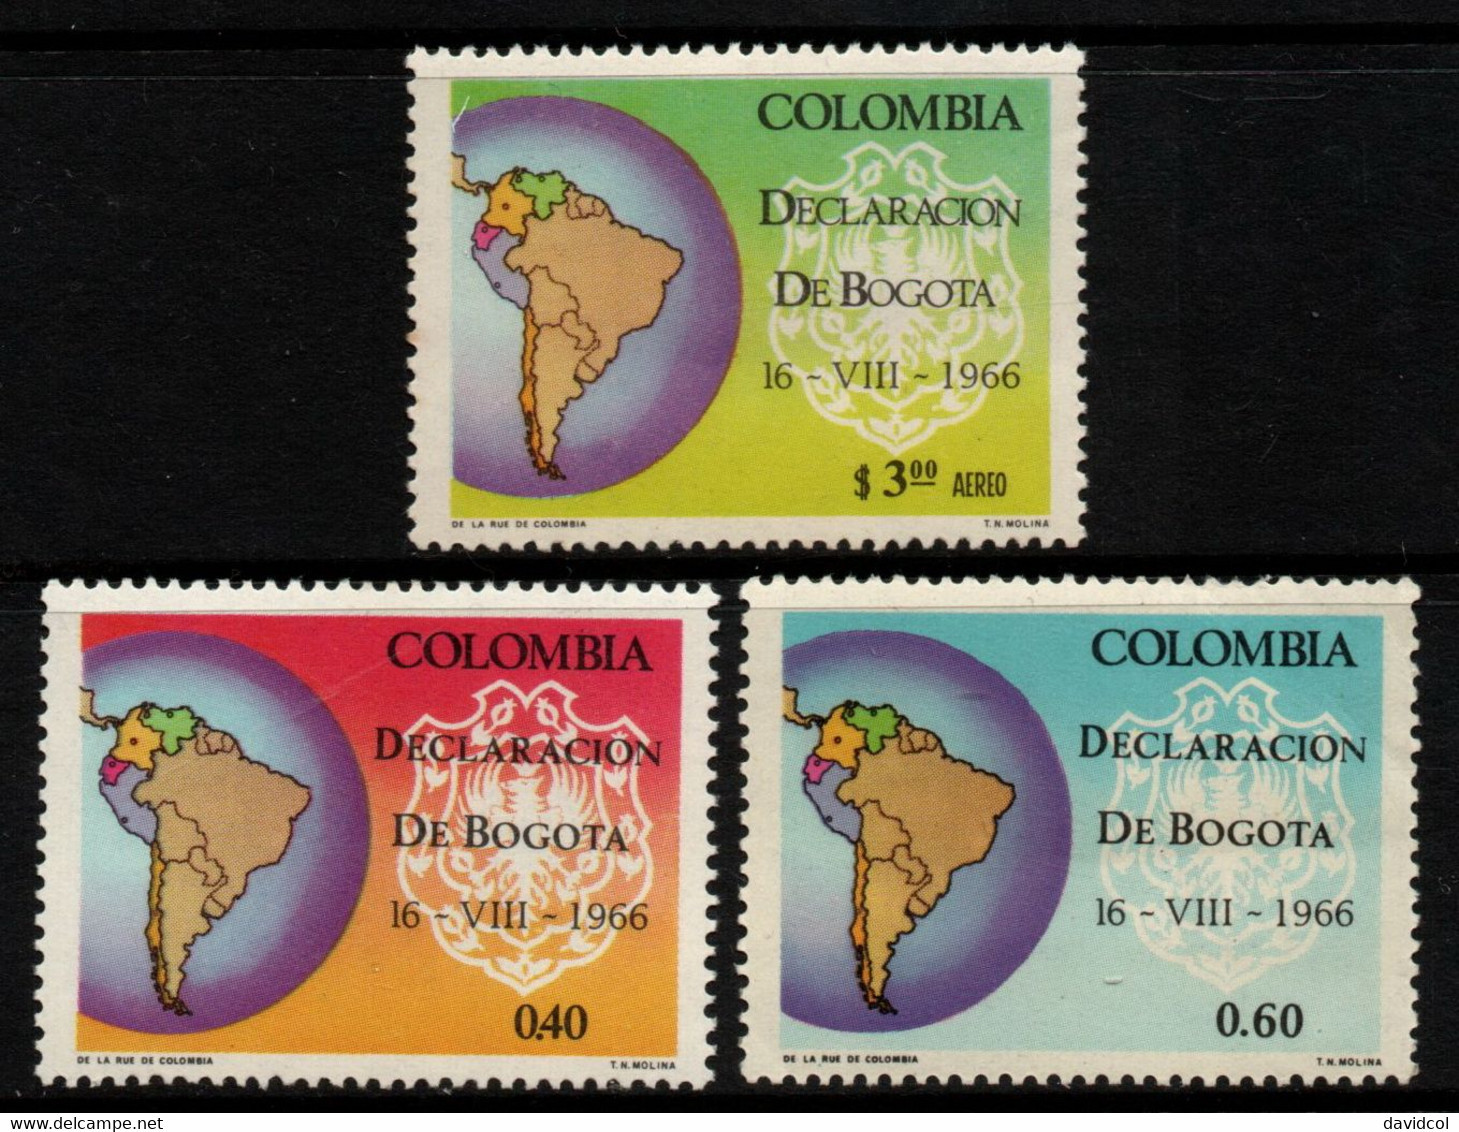 02- KOLUMBIEN – 1967- MI#:1095-1097 - MNH- BOGOTA DECLARATION – MAPS/ COAT - Kolumbien